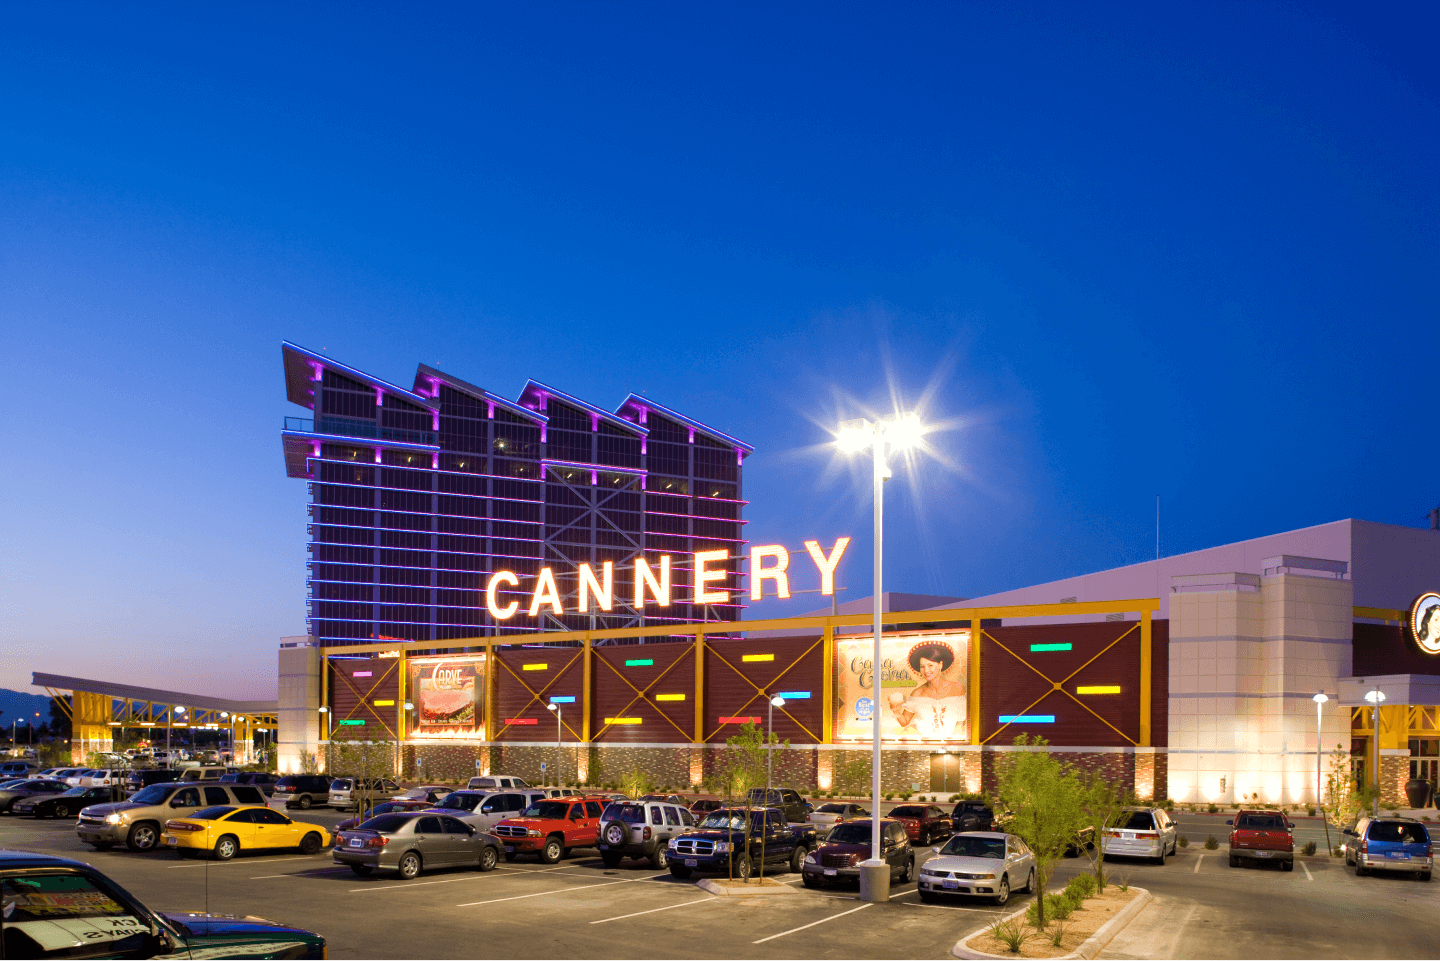 Eastside Cannery Casino Hotel